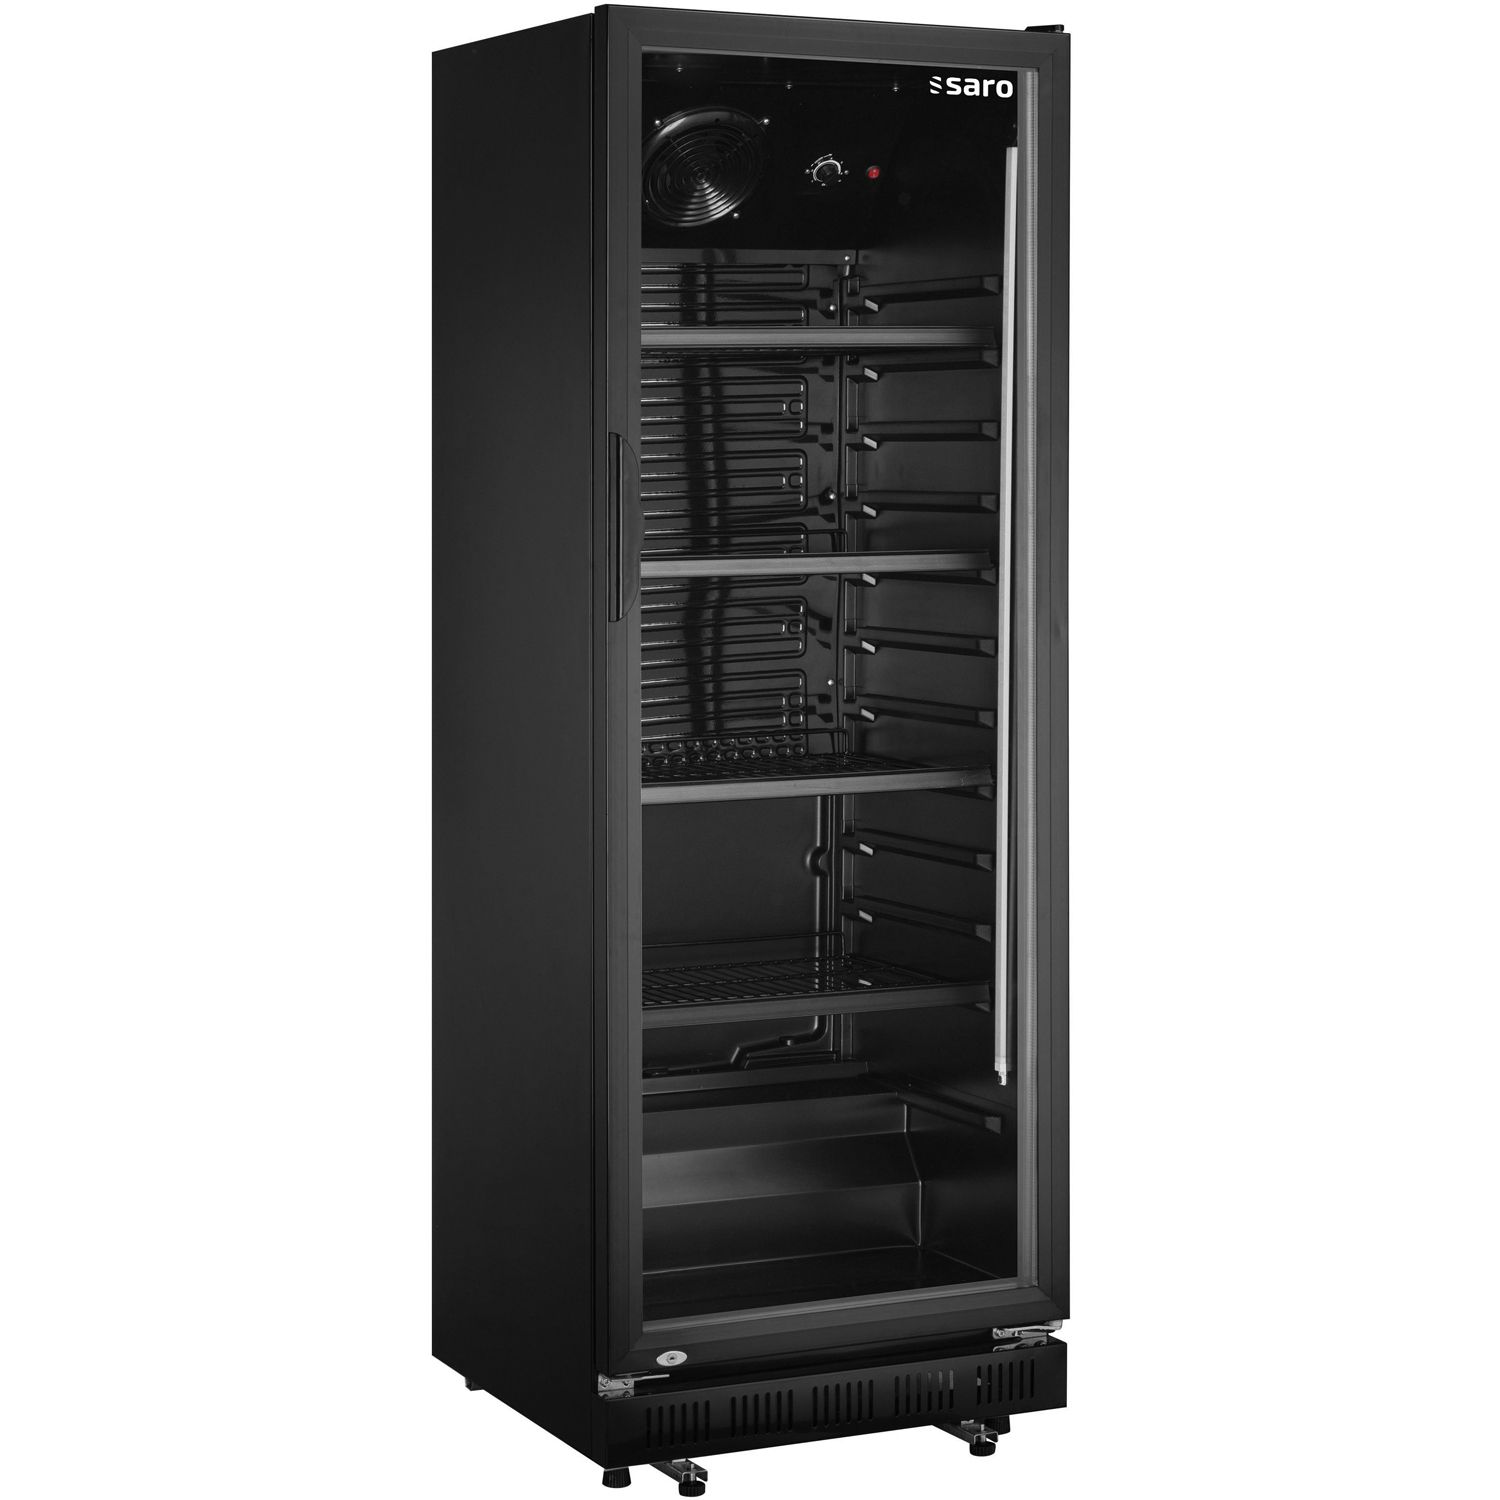 Kroak K-CR01 40L Autokühlschrank Zweizonentür Tragbarer – Page 3 –